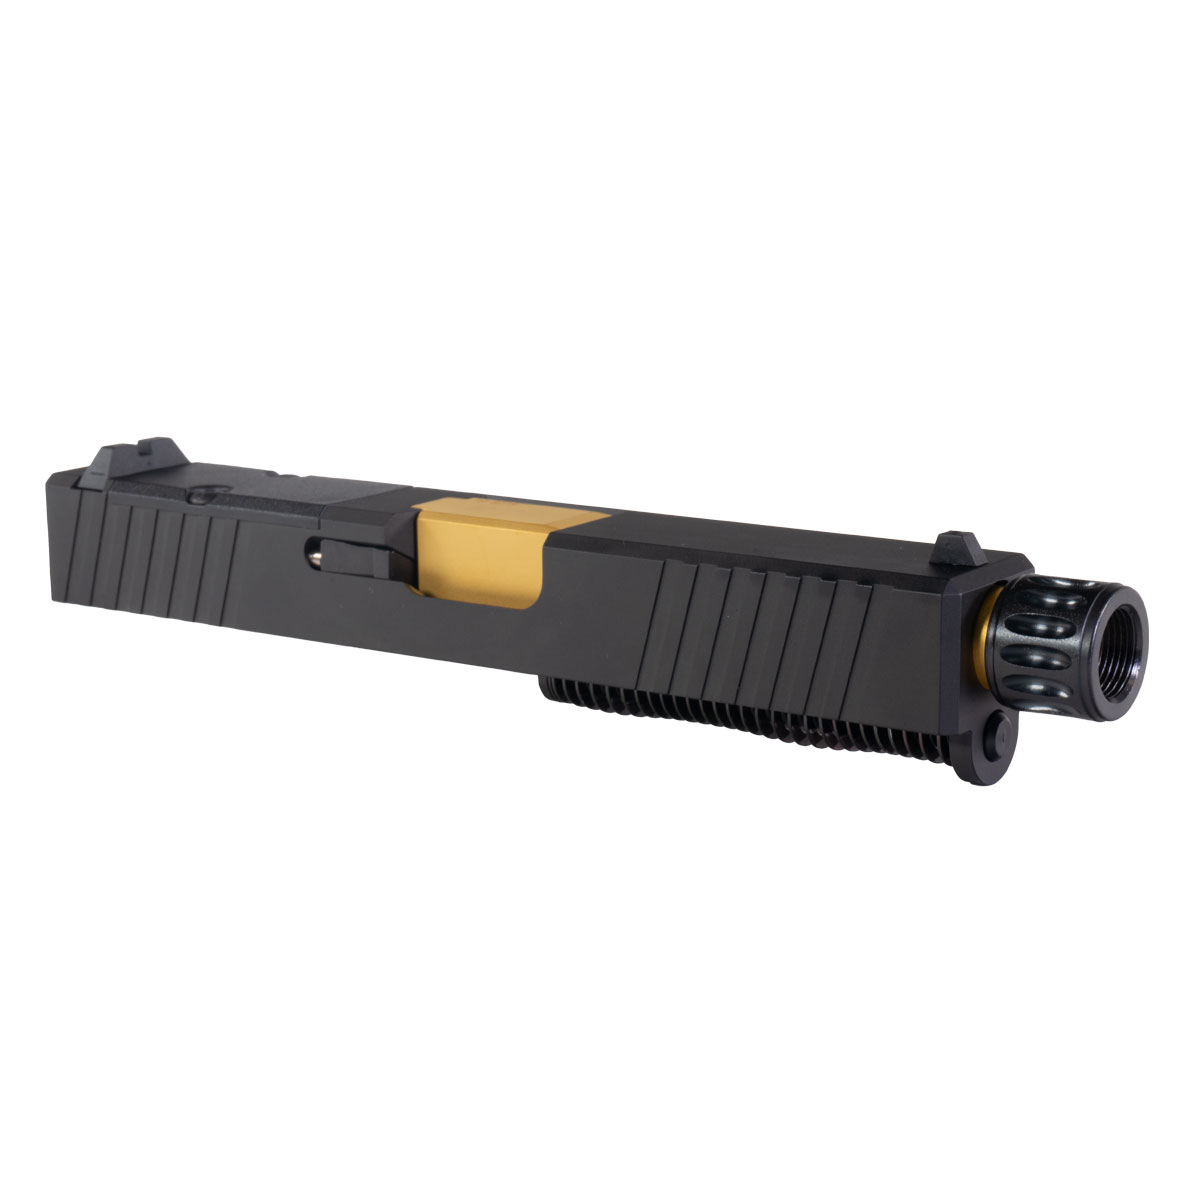 DDS 'Bloei' 9mm Complete Slide Kit - Glock 19  Compatible